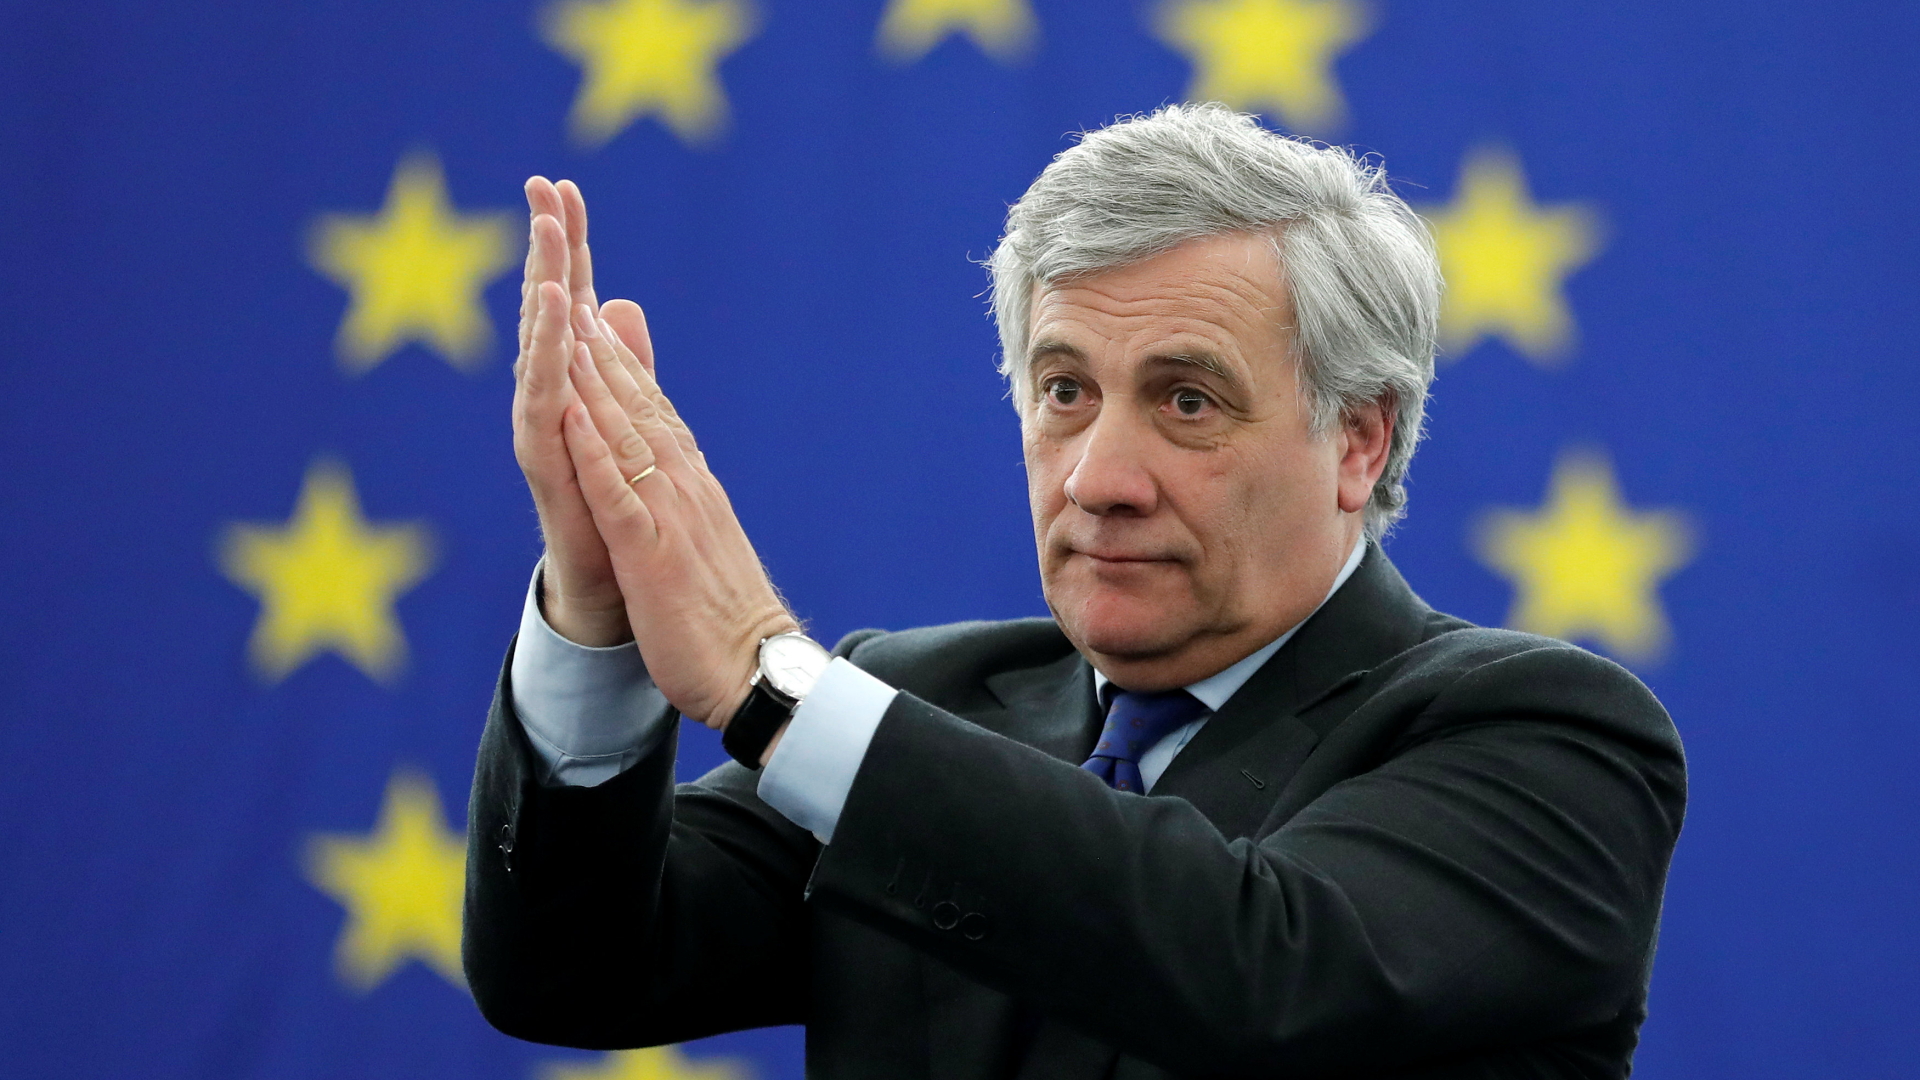 Antonio Tajani ist neuer EU-Parlamentspräsident | REUTERS